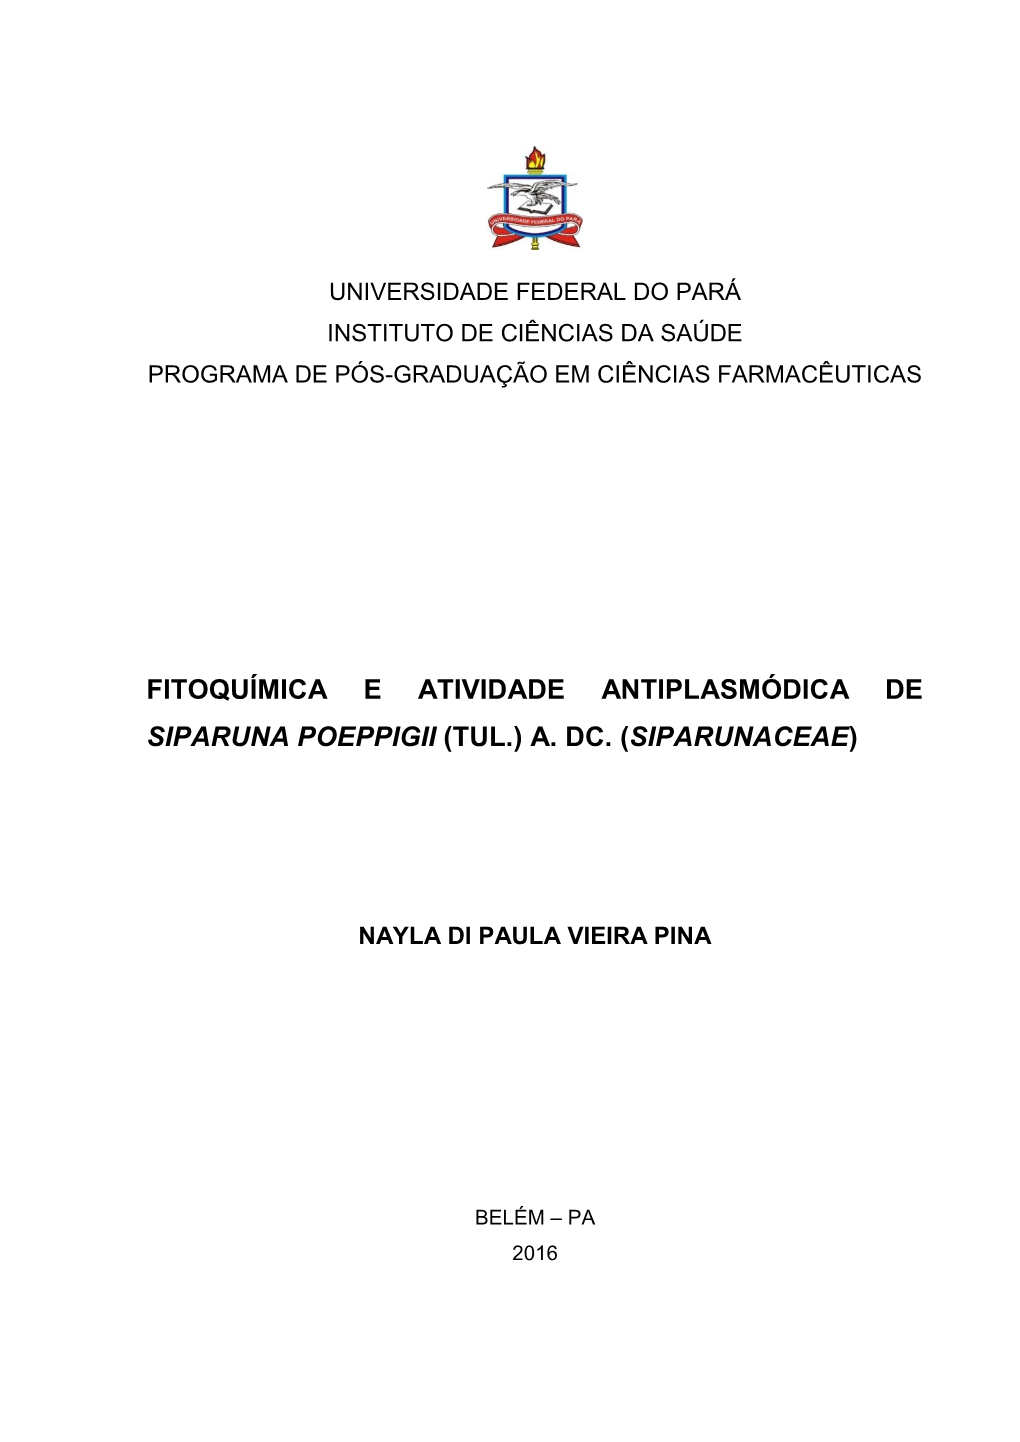 Fitoquímica E Atividade Antiplasmódica De Siparuna Poeppigii (Tul.) A. Dc. (Siparunaceae)